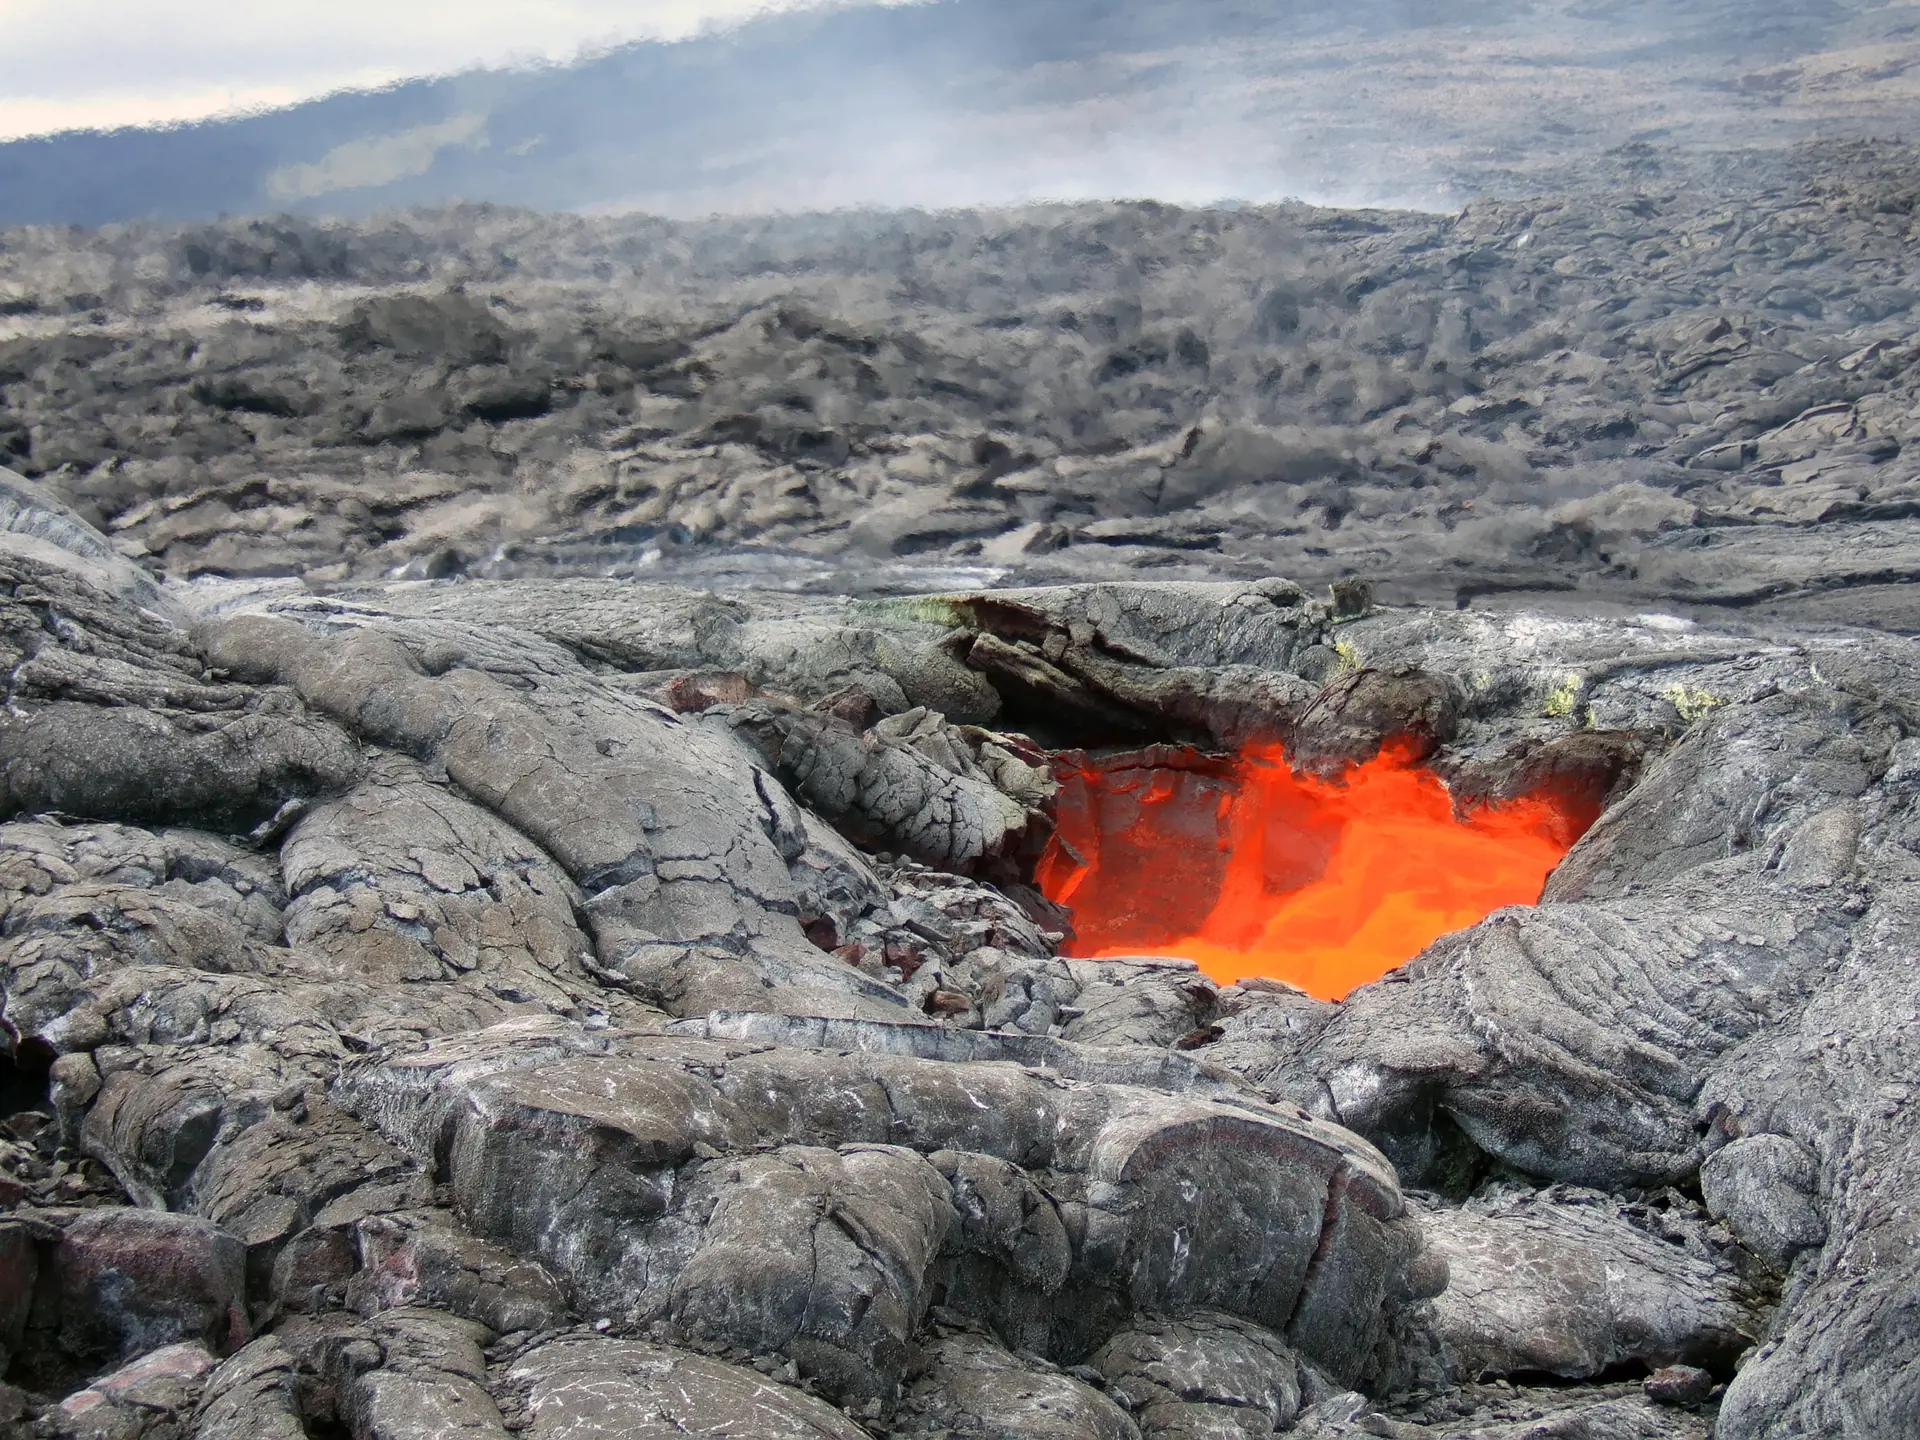 BIG ISLAND - Kom helt tæt på de aktive vulkaner i Hawaii Volcanoes National Park.